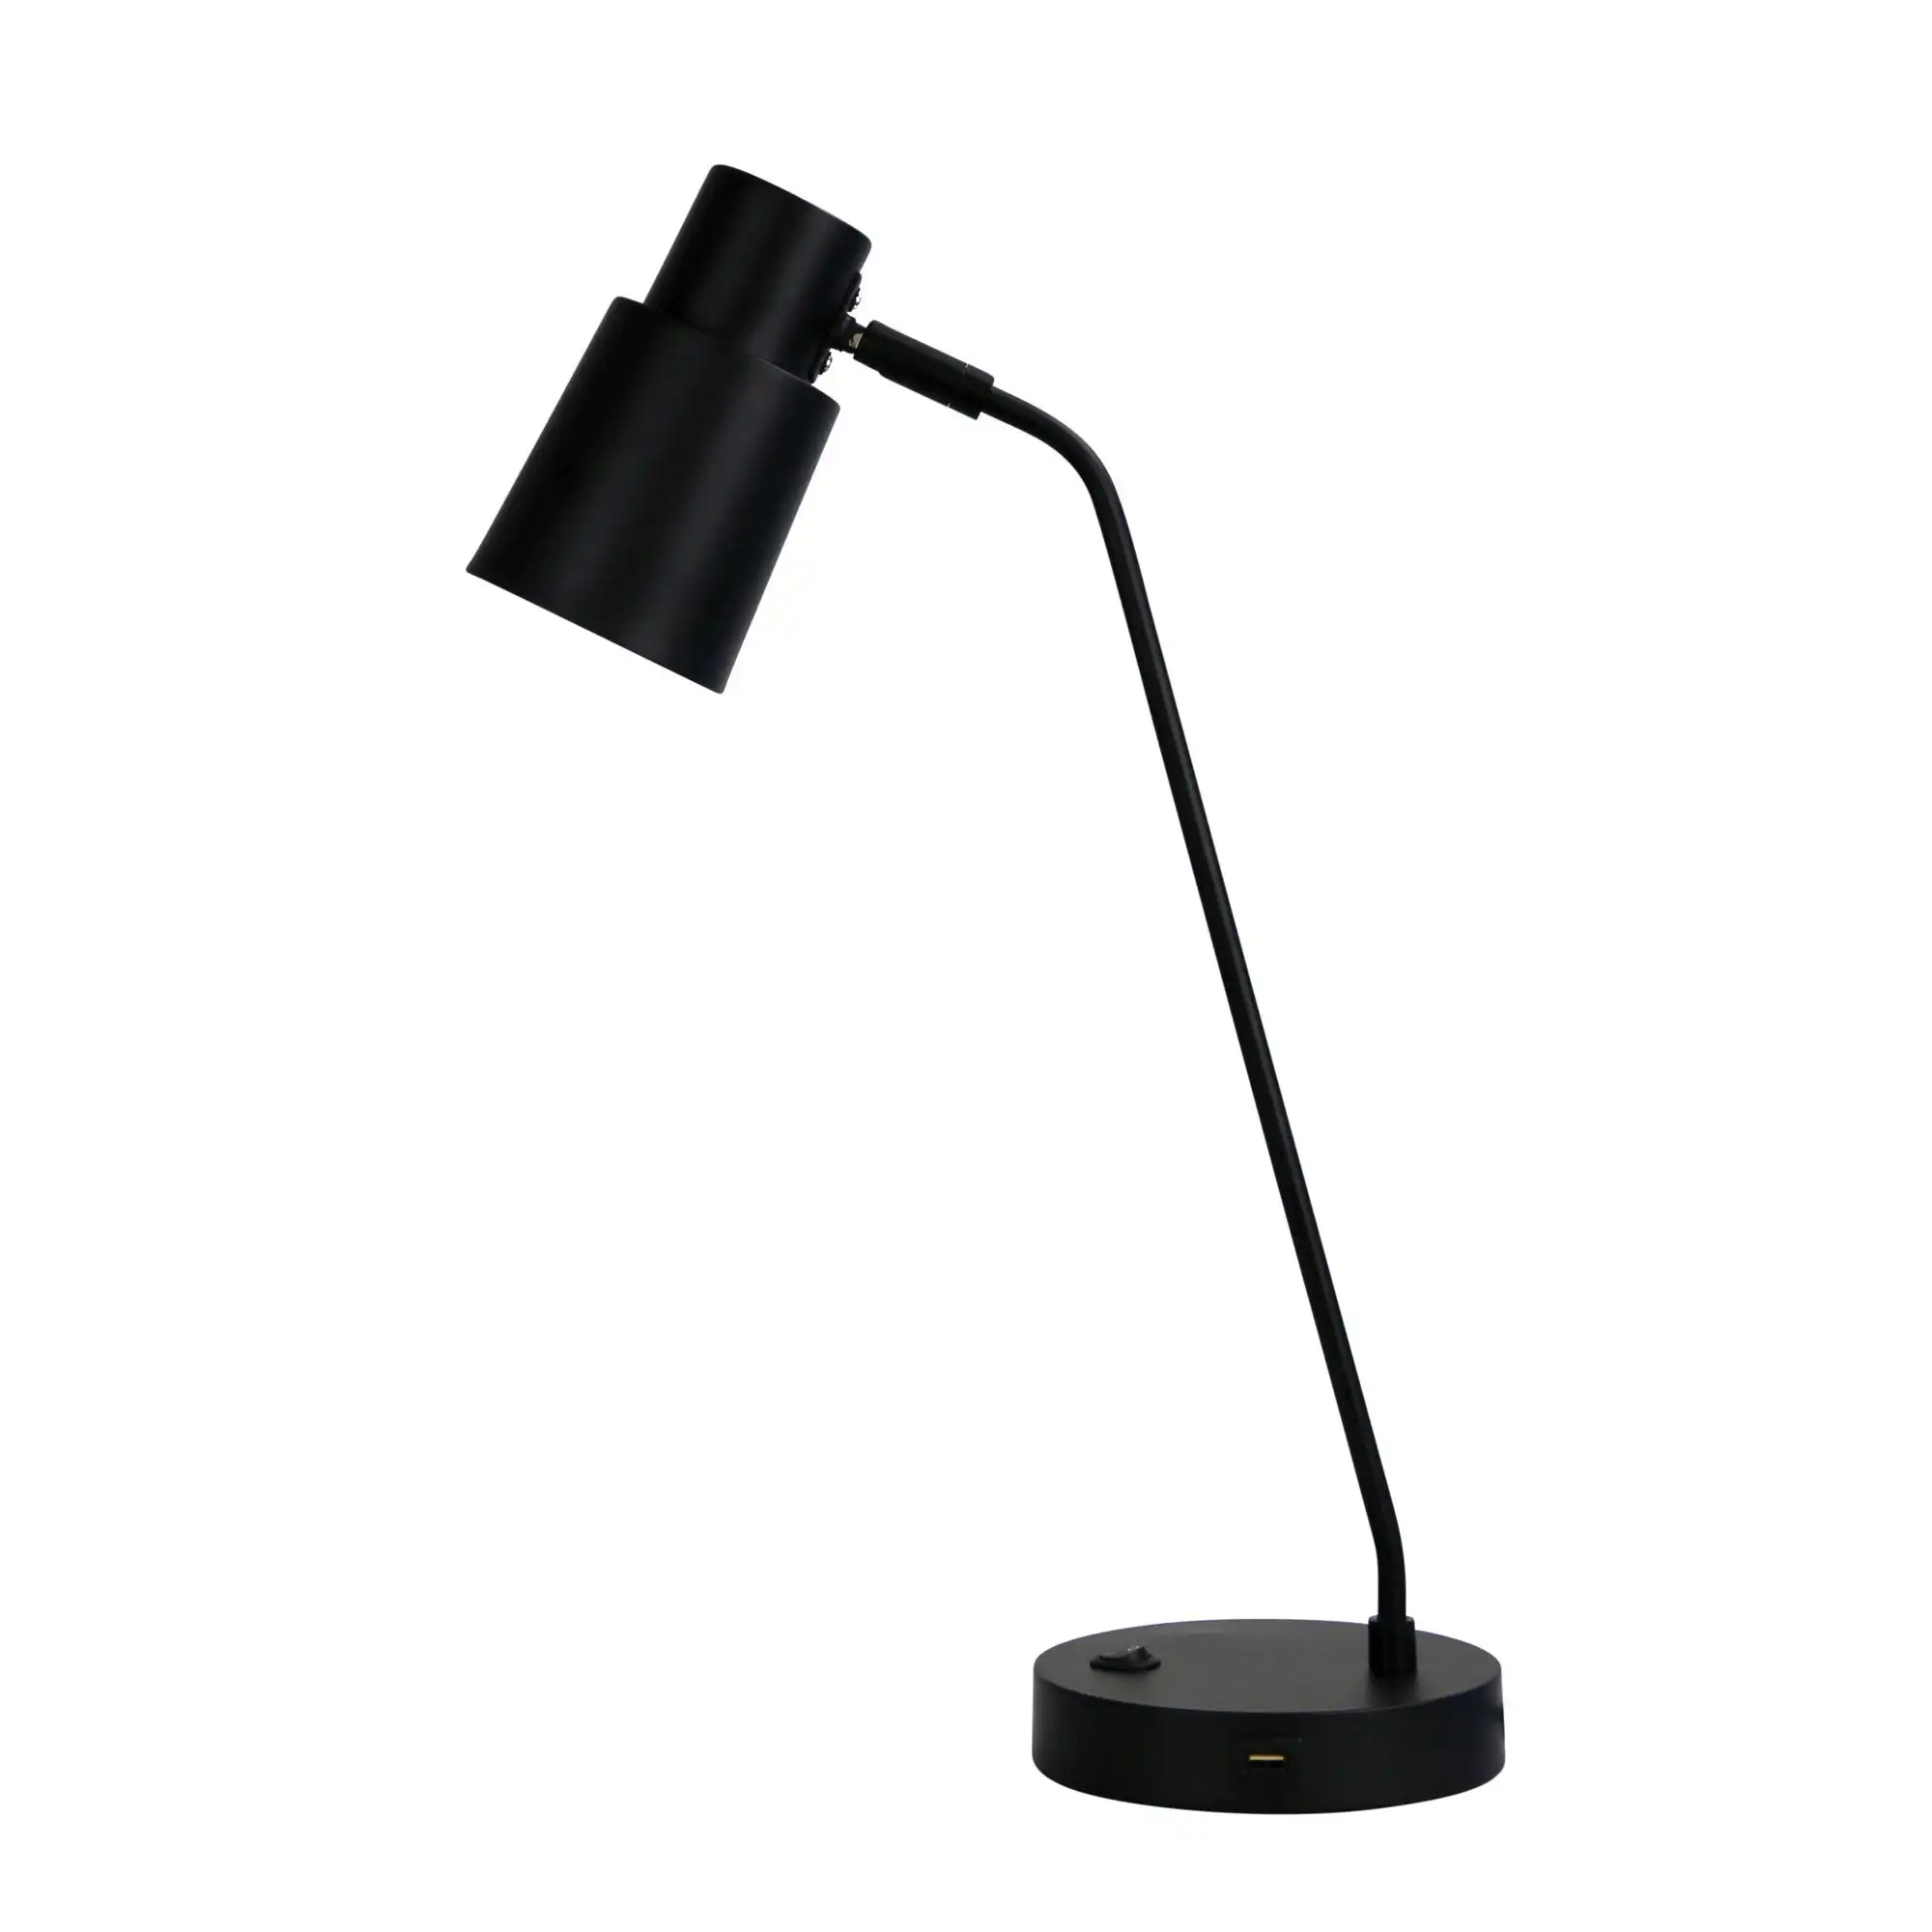 RIK Black Table lamp with USB socket